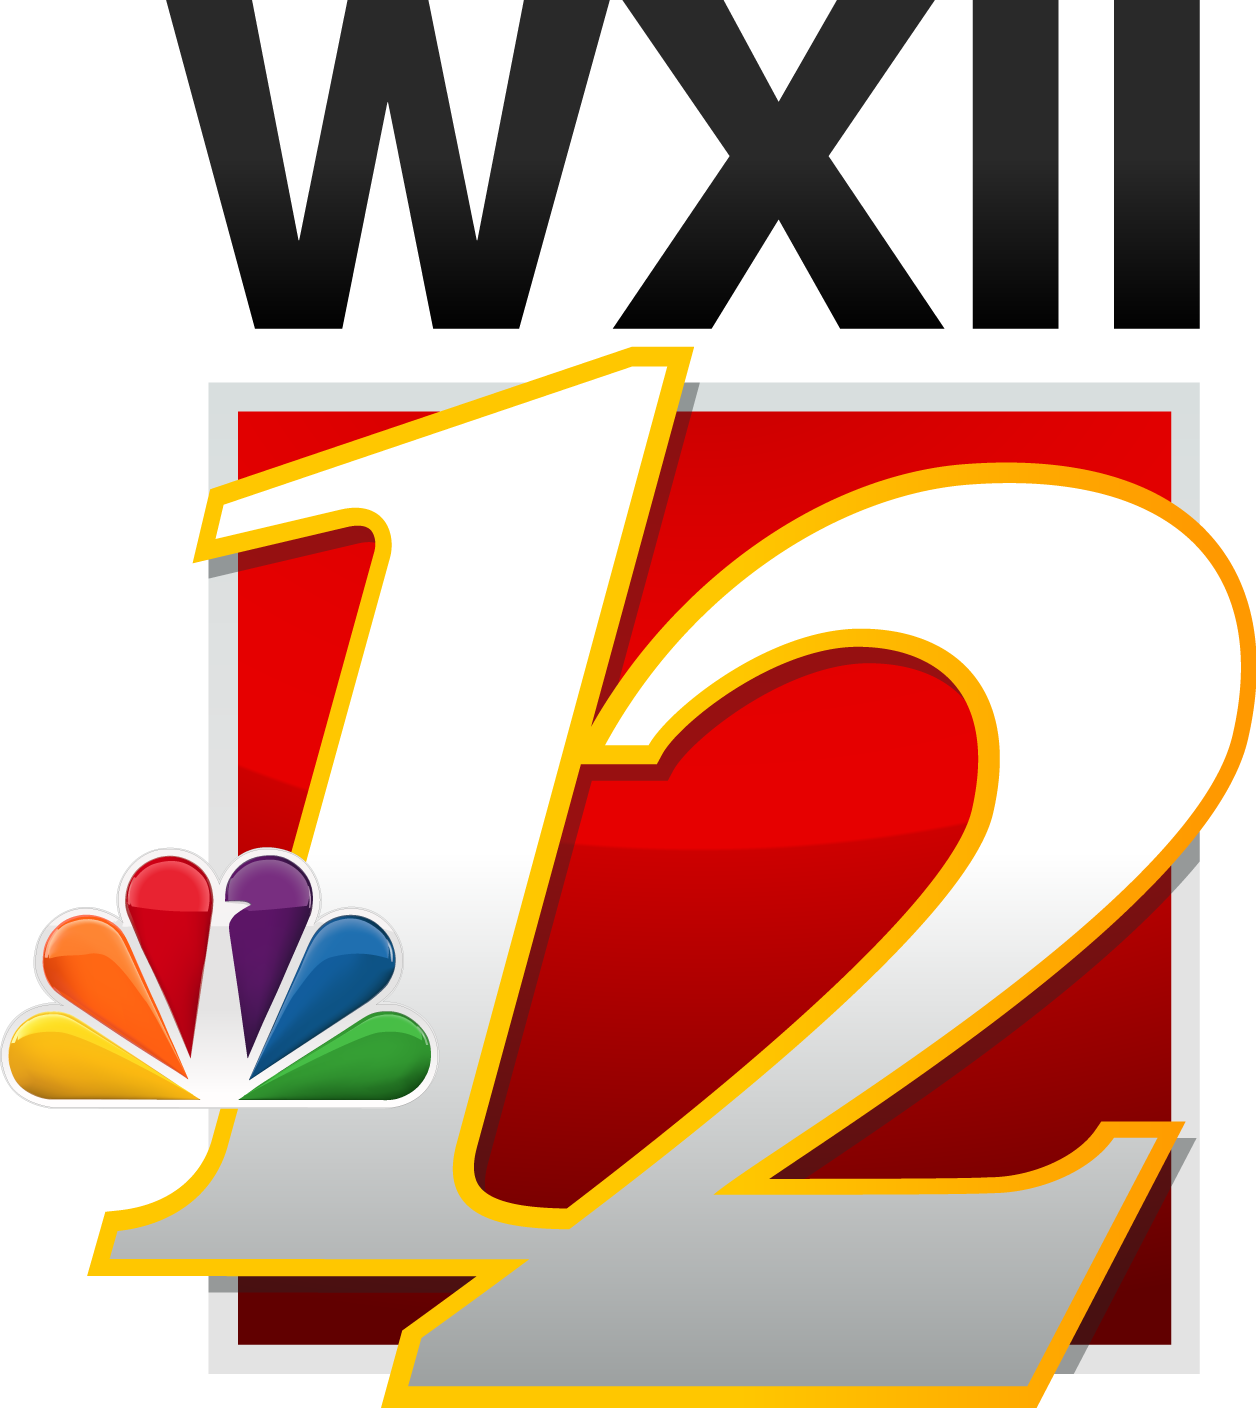 4c. WXII (Media Partner)